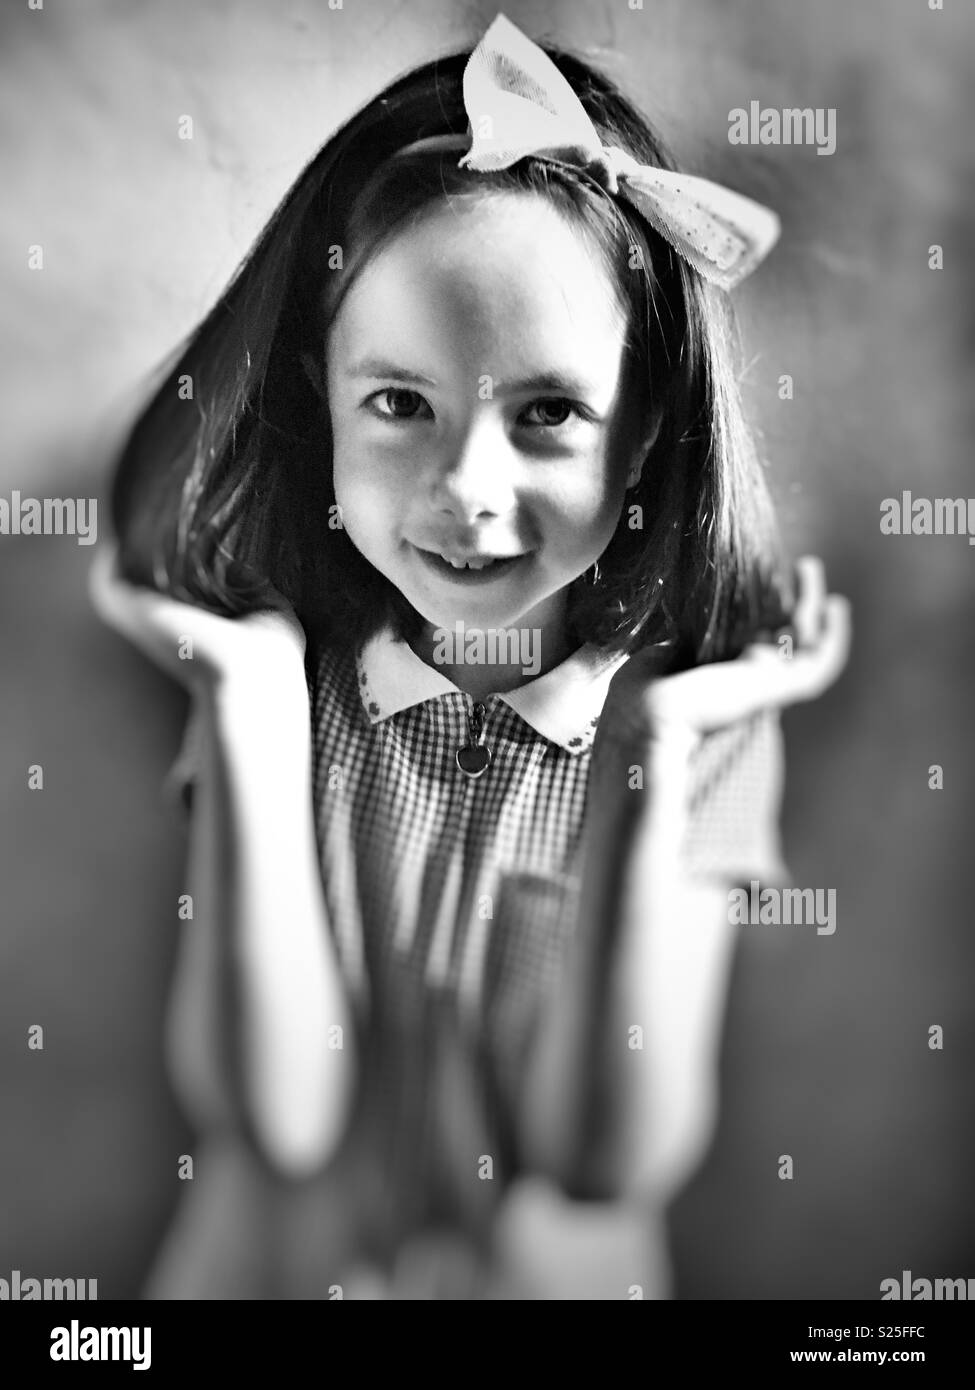 Young girl in school uniform Stock Photo